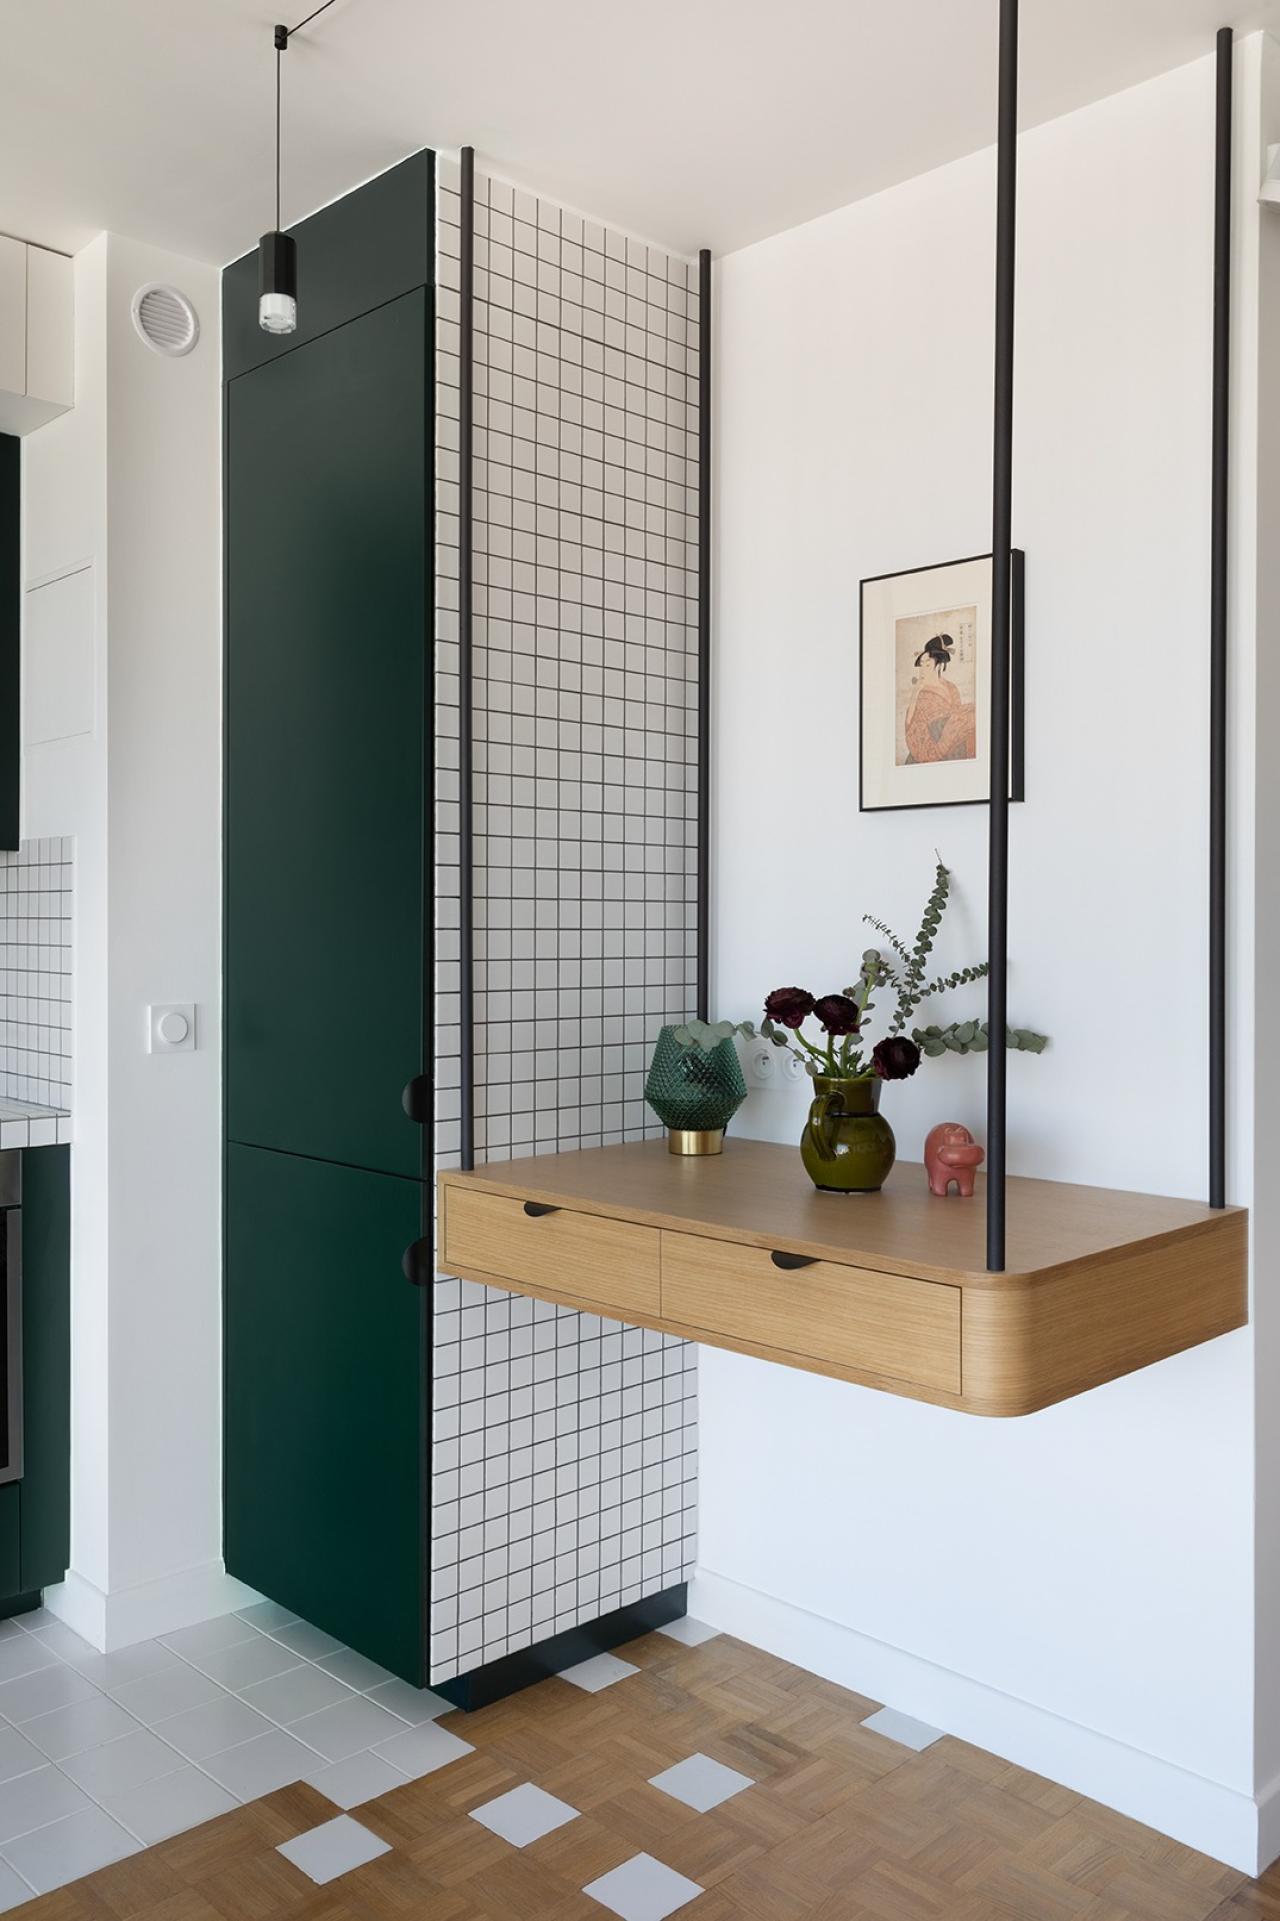 A graphic kitchen by Lagom Architectes - Photo credits Delphine Queme